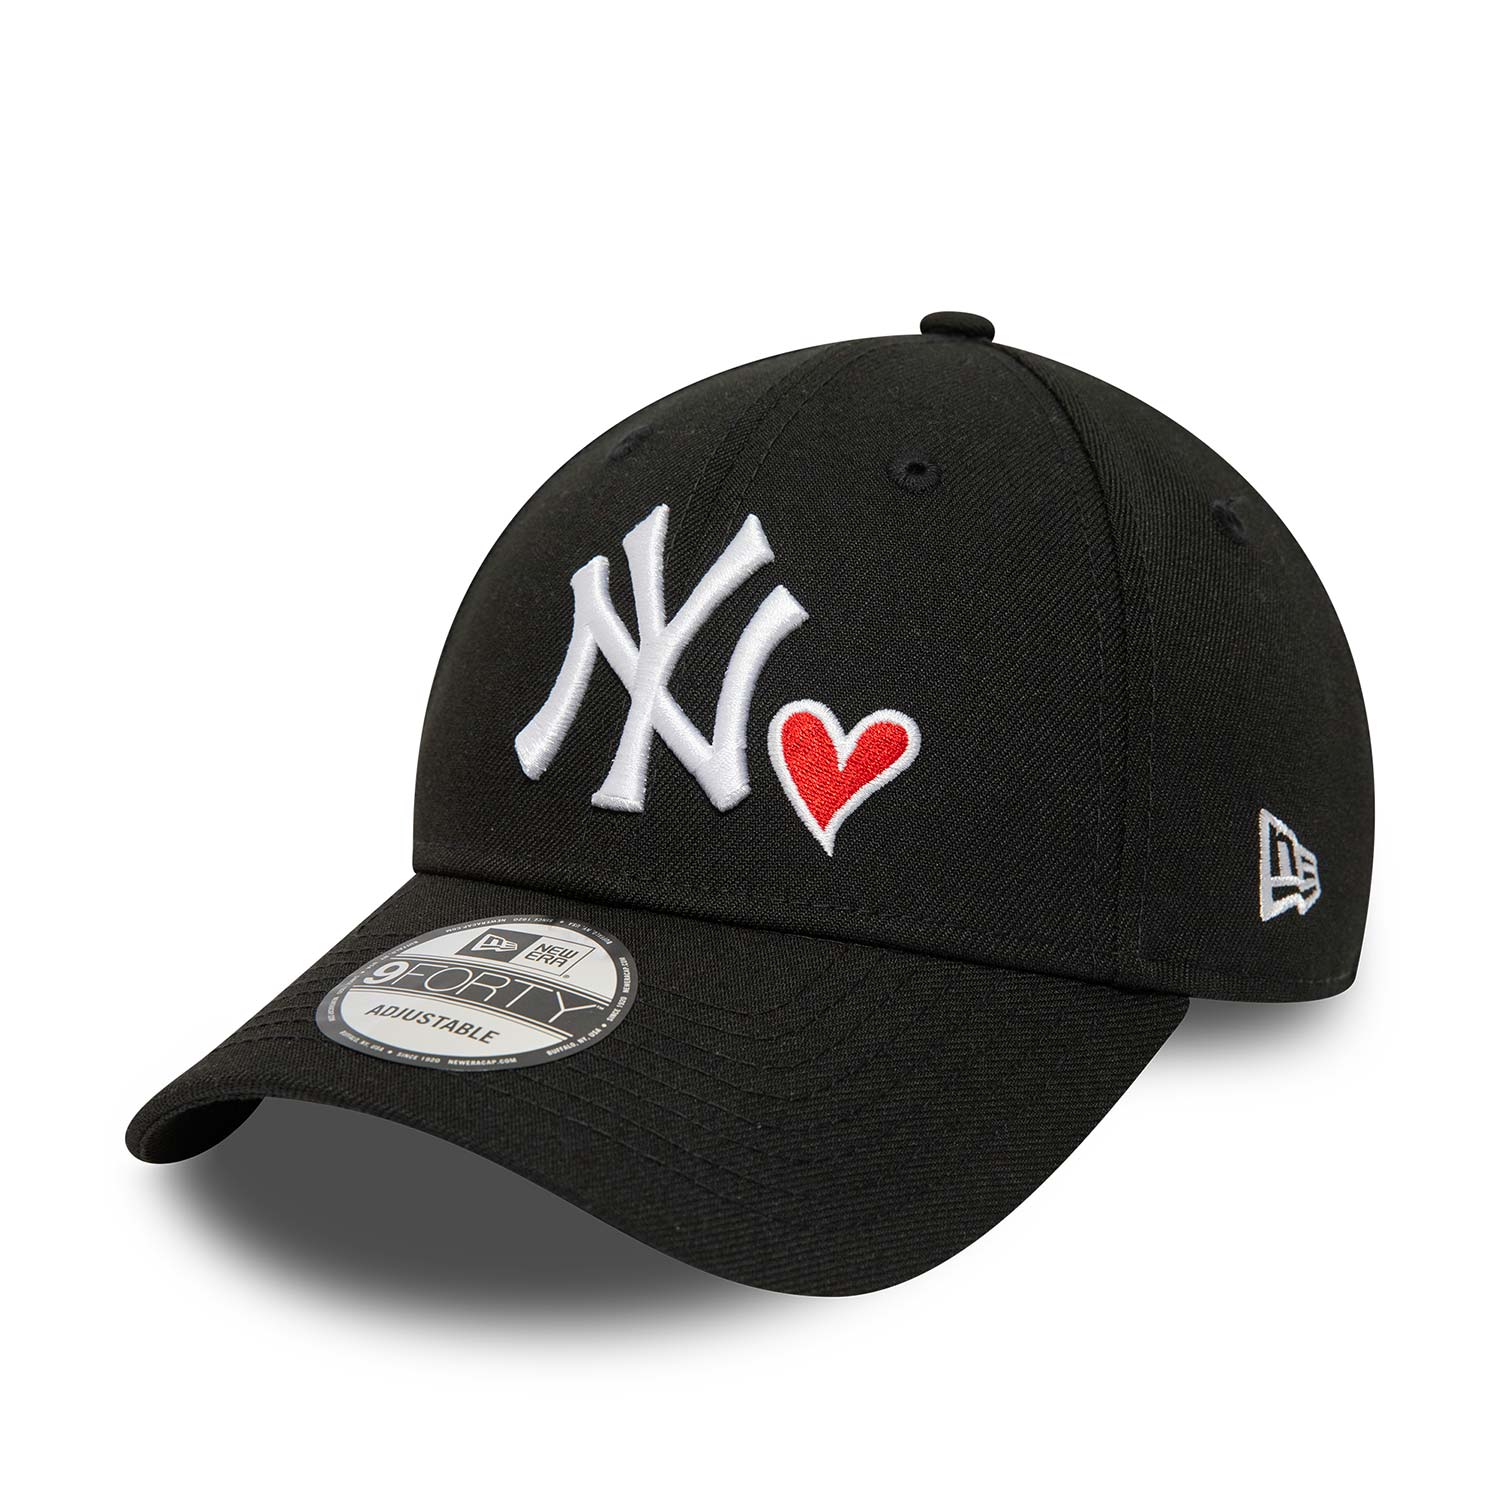 Gorra New Era New York Yankees 9FIFTY Color Pack New Era